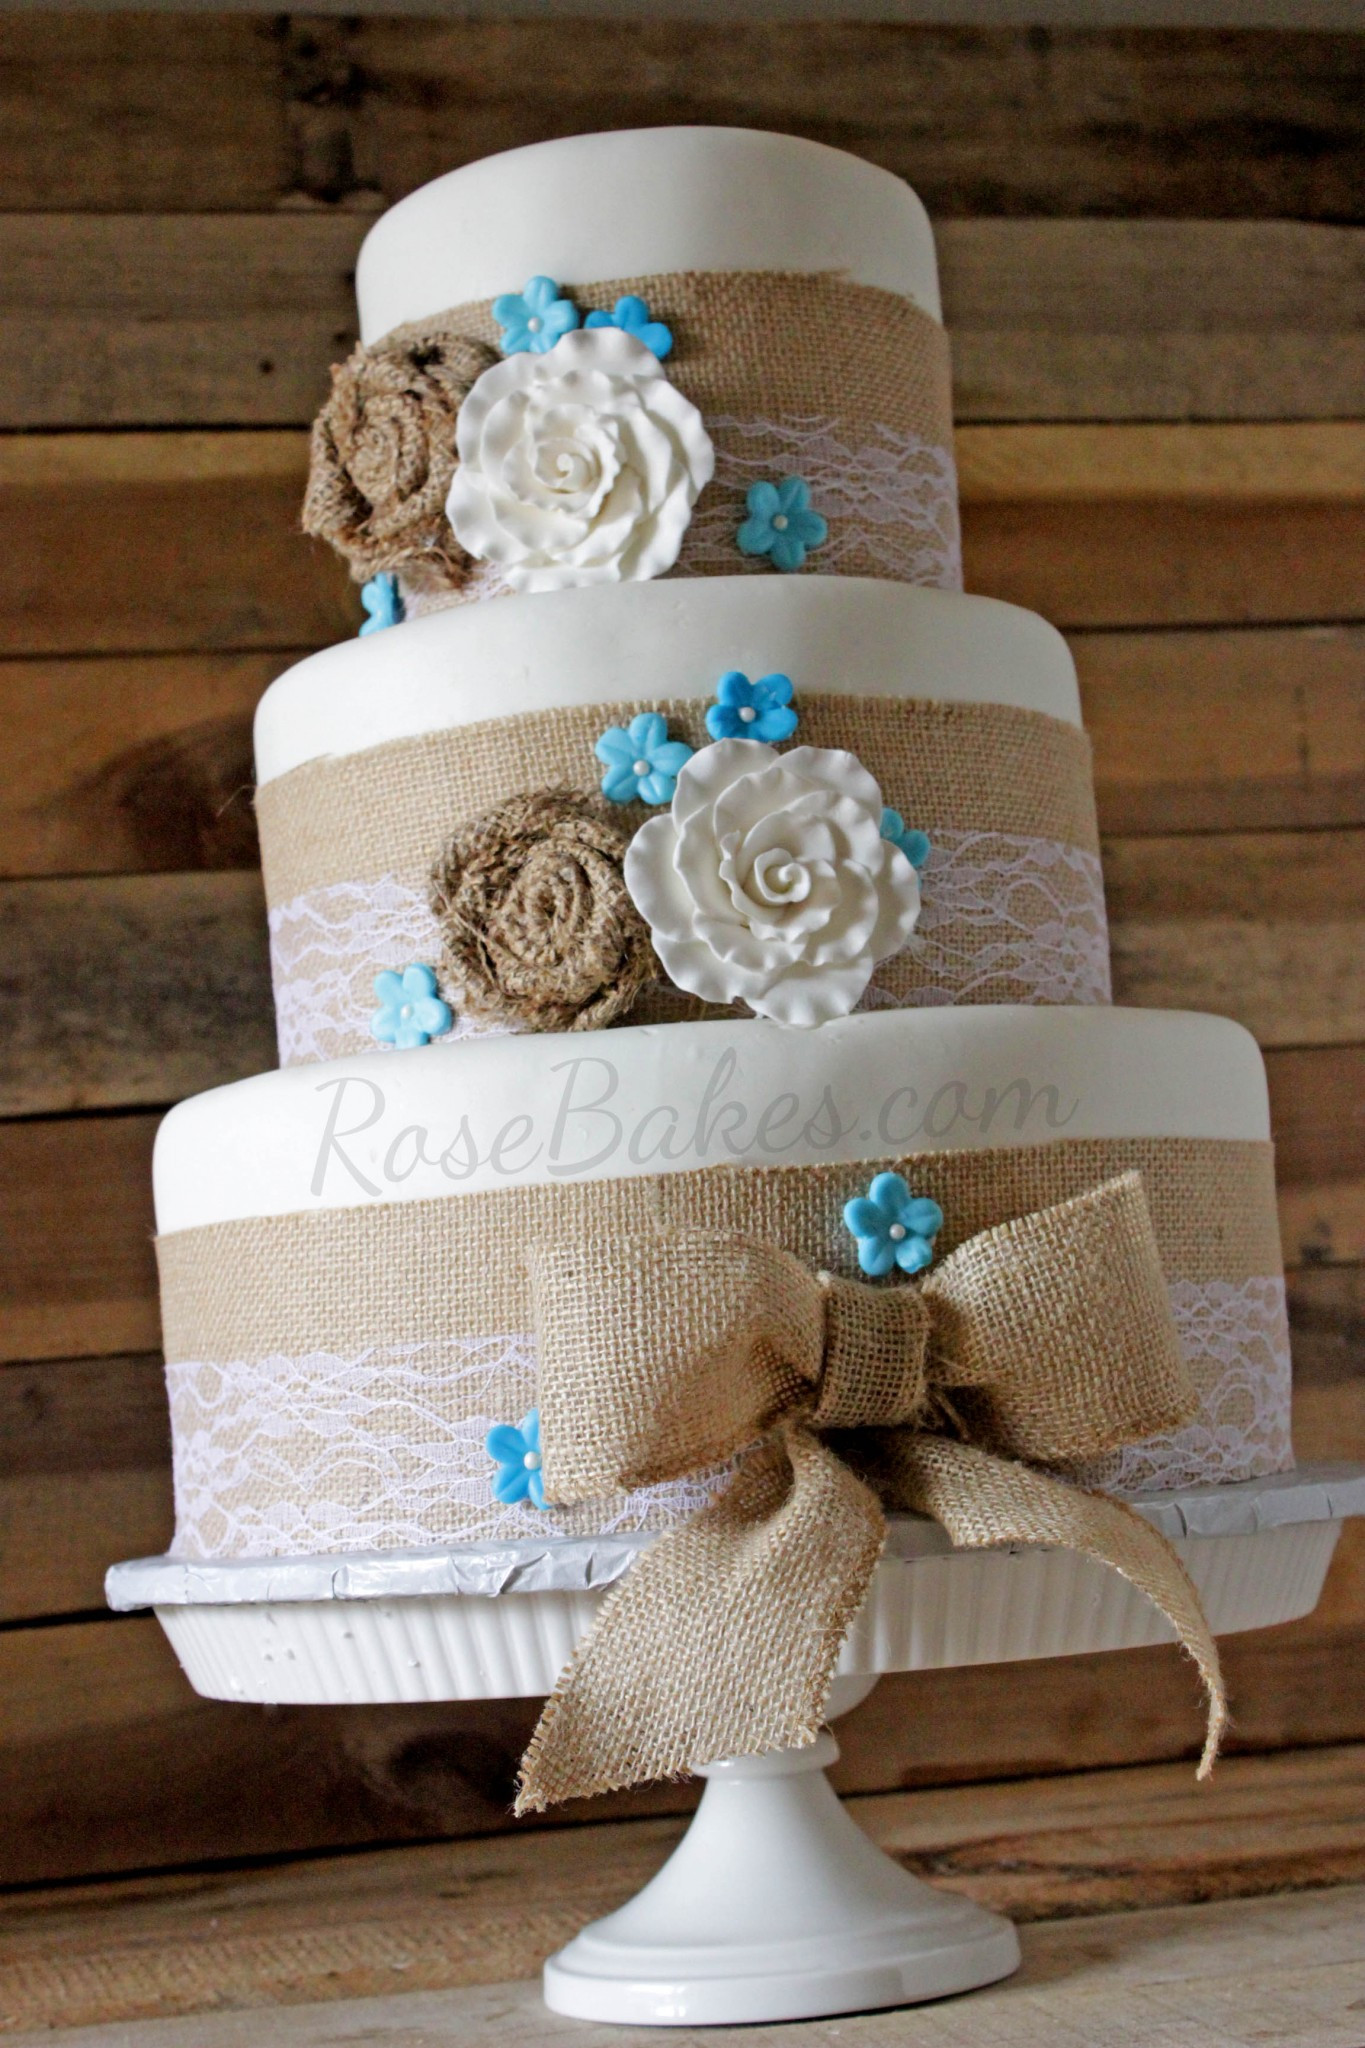 Rustic Wedding Cakes
 Burlap & Lace Rustic Wedding Cake Rose Bakes